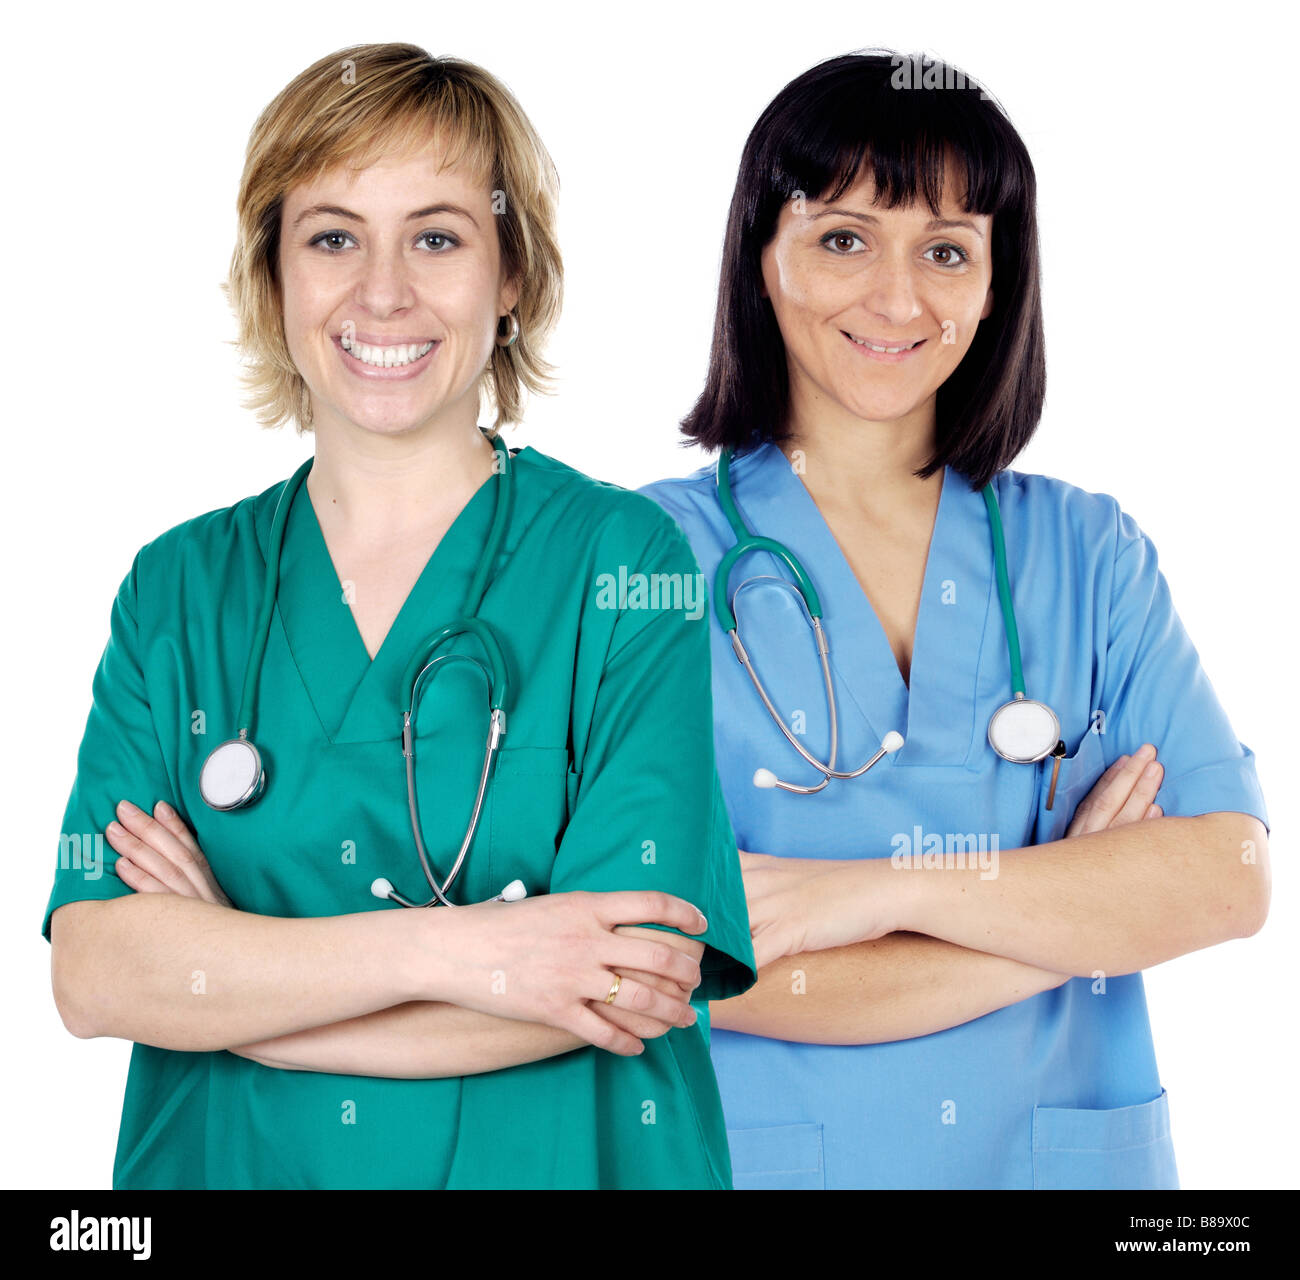 Две женщины врачи. Два врача девушки. Фото два доктора женщины. Девушка медик 2. Два врача и одна женщина.